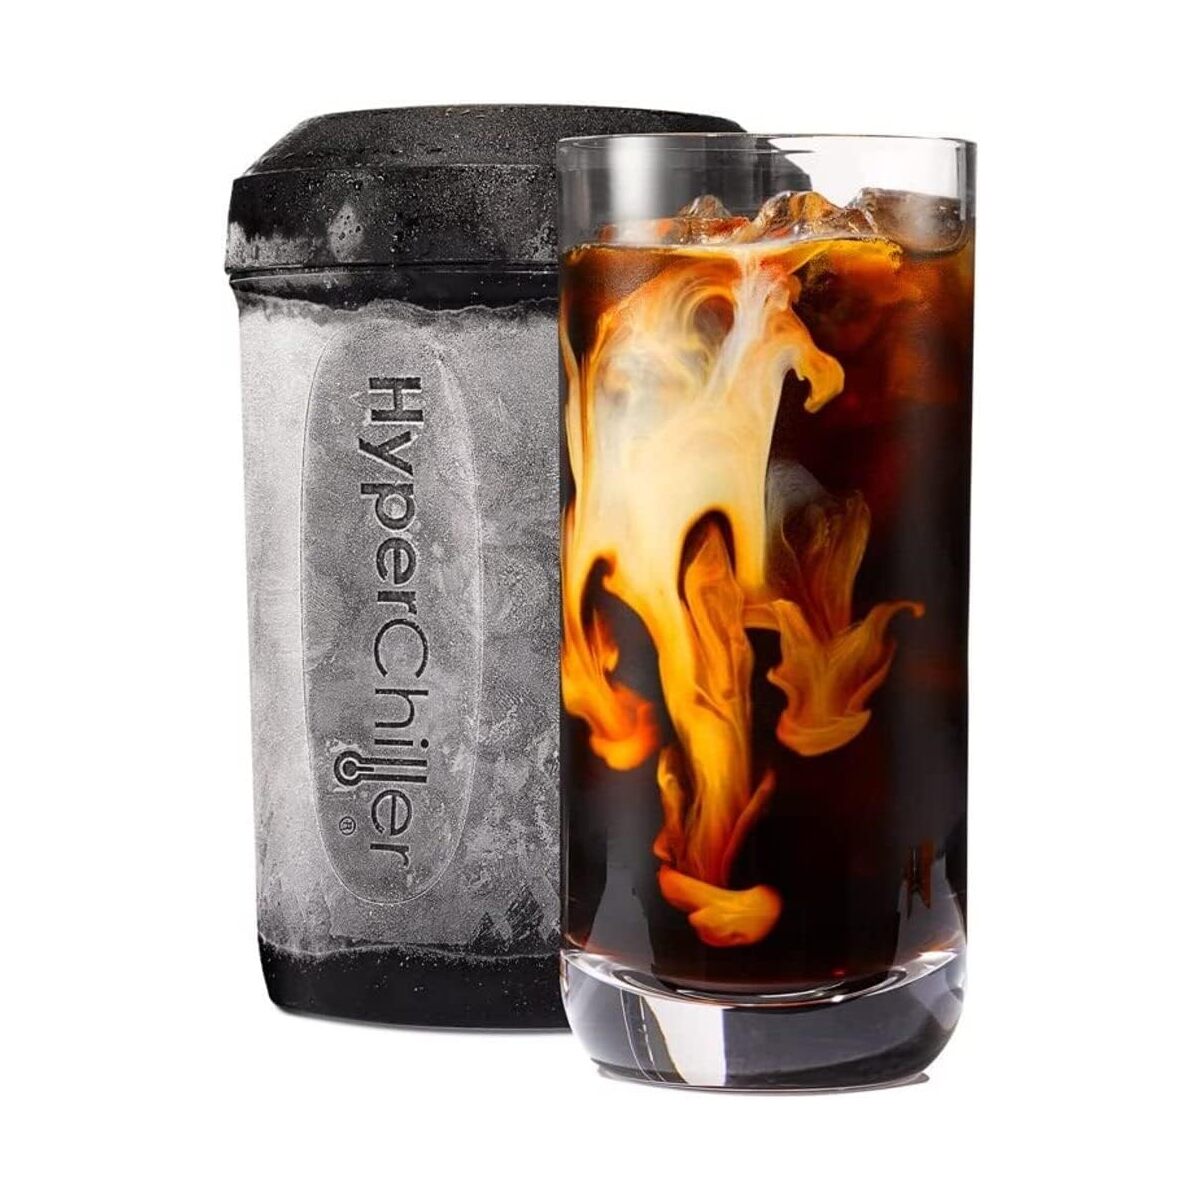 HyperChiller Iced Coffee / Beverage Cooler